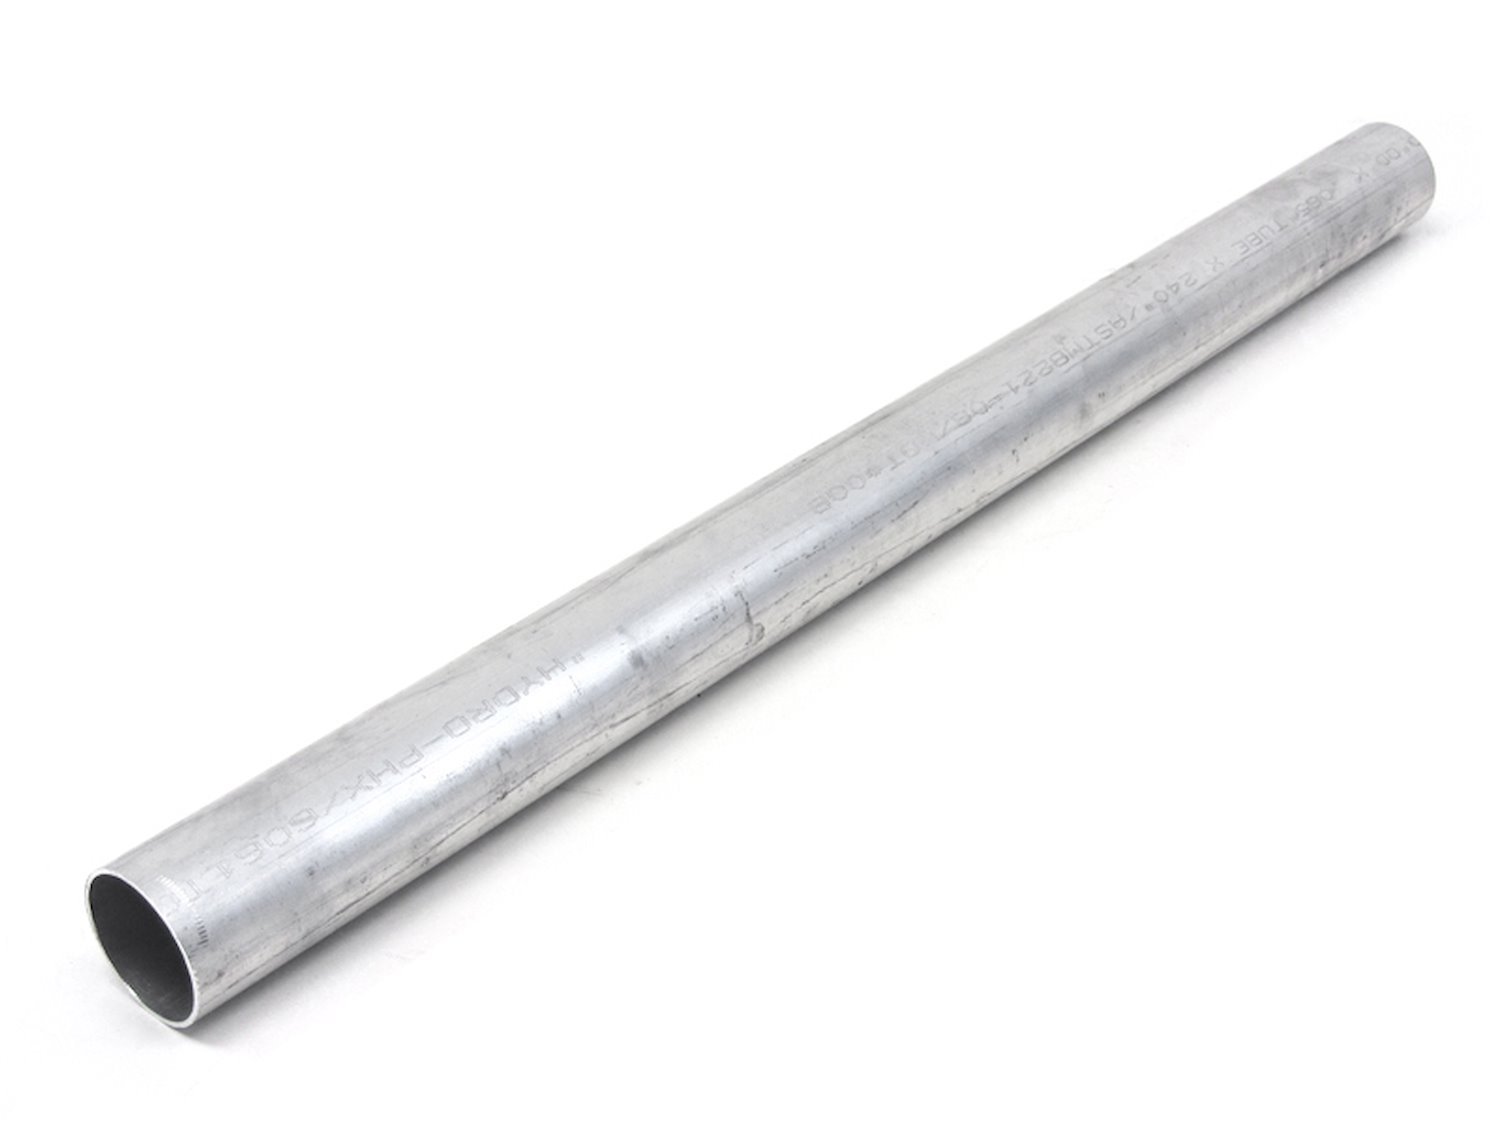 AST-2F-062 Aluminum Tubing, 6061 Aluminum, Straight Tubing, 5/8 in. OD, Seamless, Raw Finish, 2 ft. Long